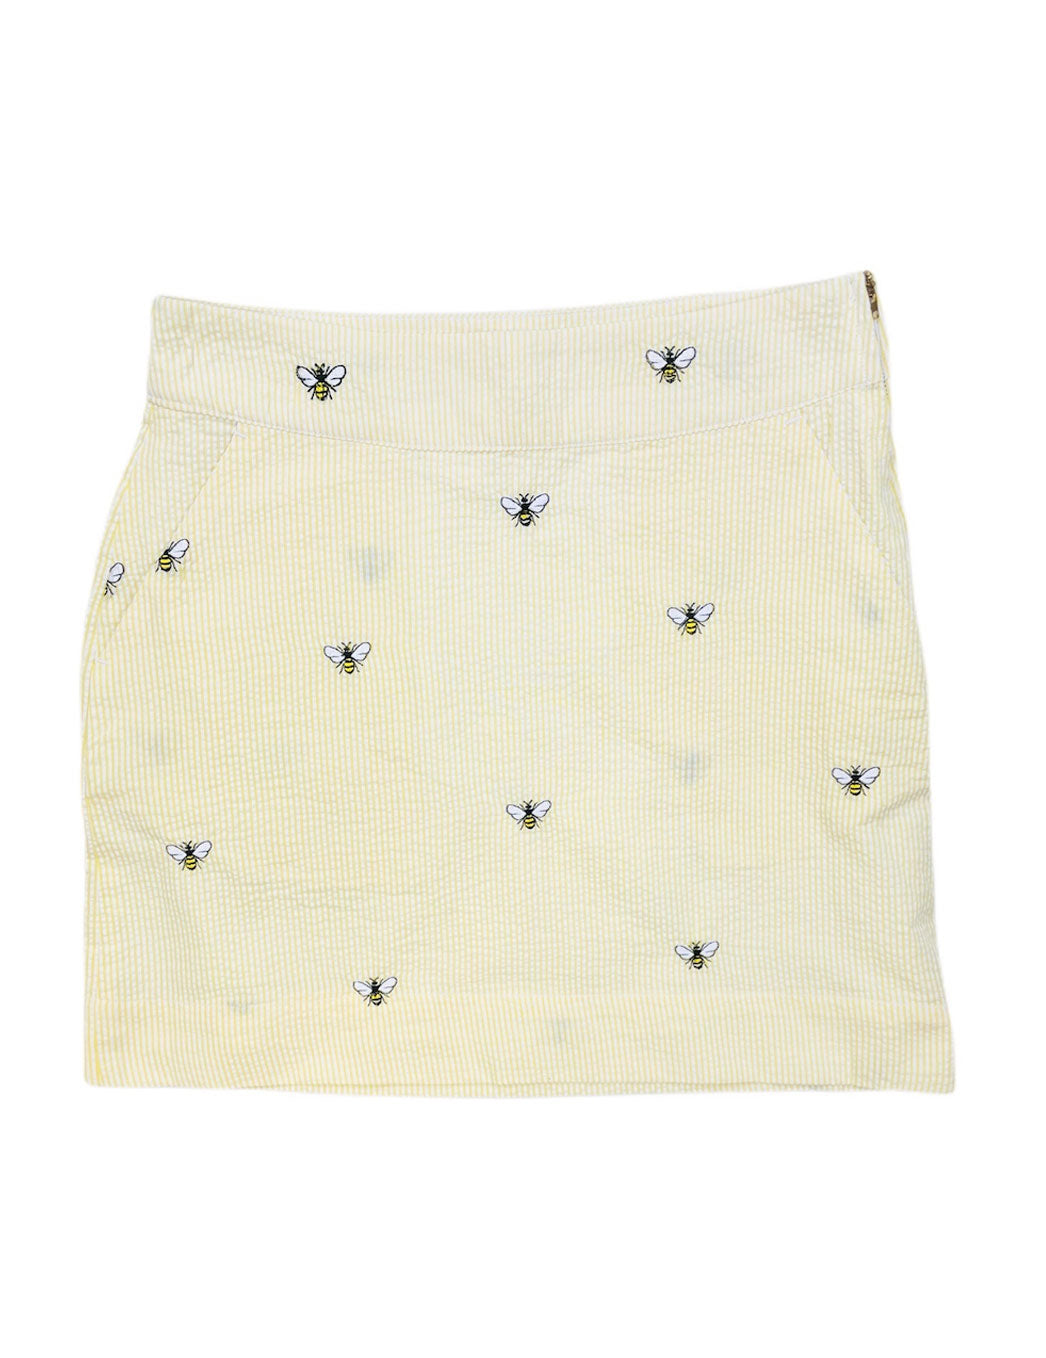 Yellow Seersucker Women's Skirt with Embroidered Bees